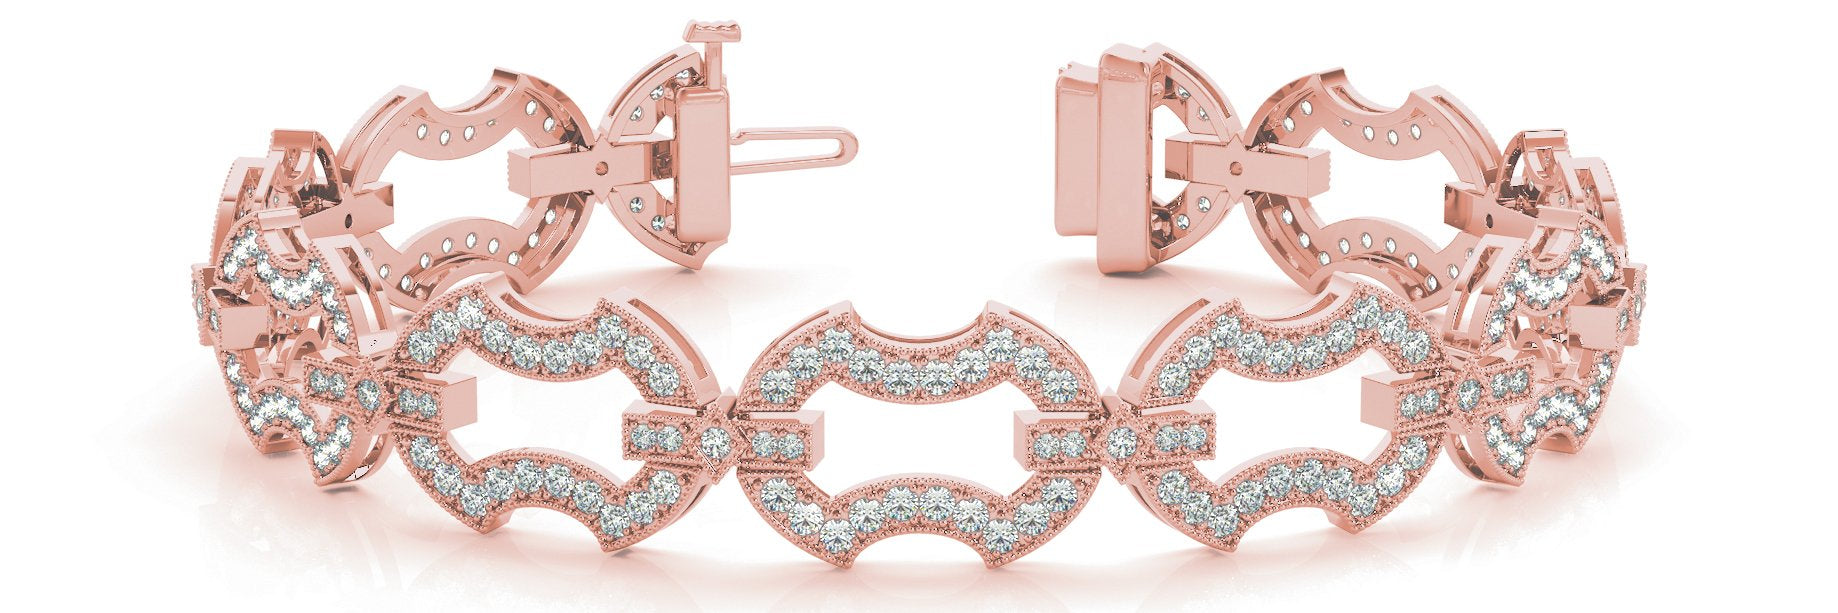 Fancy Diamond Bracelet Ladies 2.79ct tw - 14kt Rose Gold